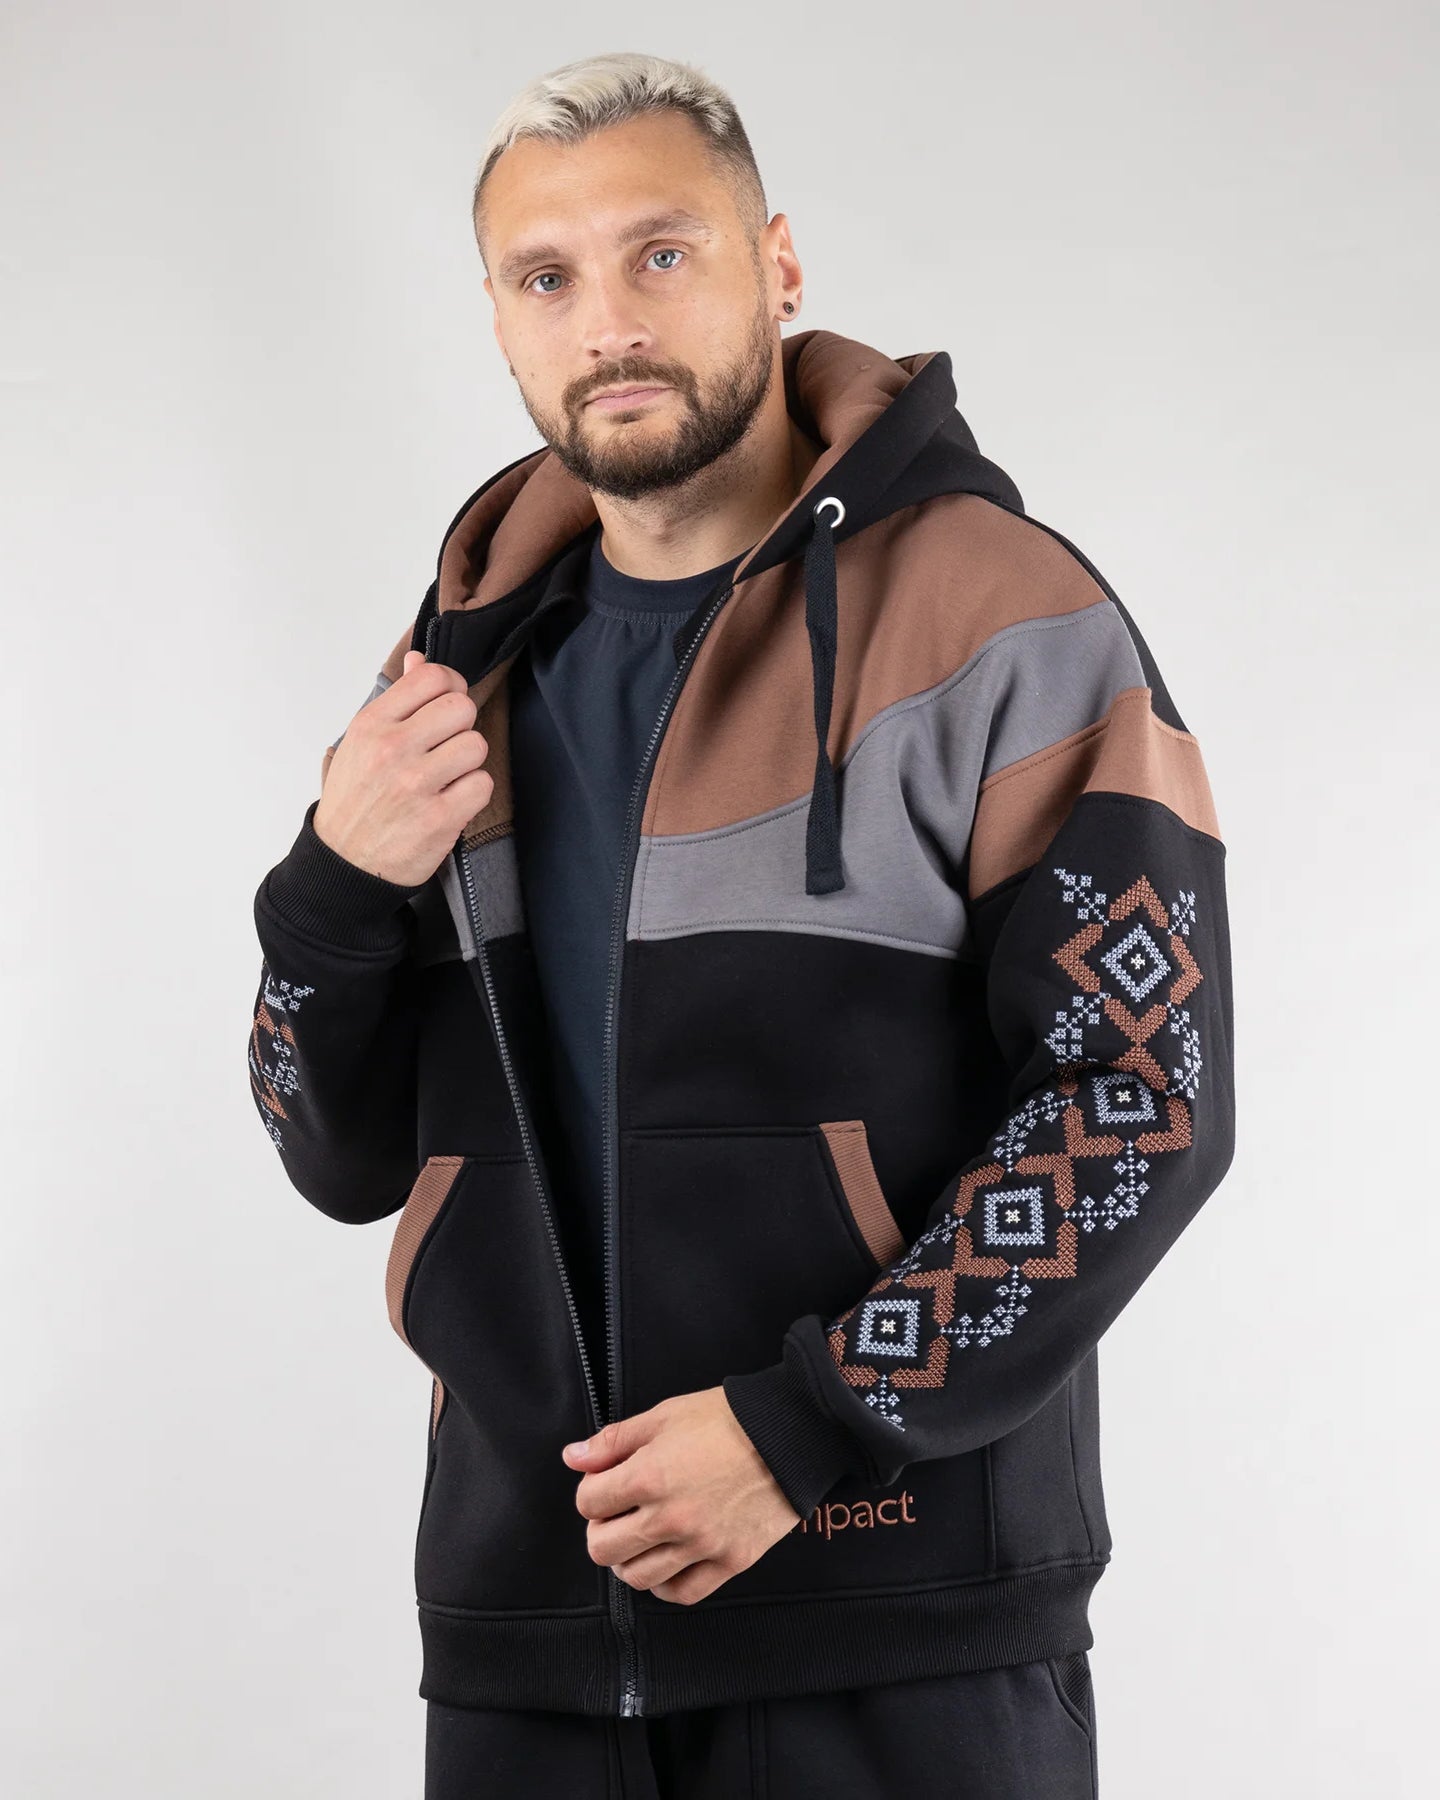 Urban Zip-up hoodie “Sunrise”, Ukrainian vyshyvanka style. Black/Brown